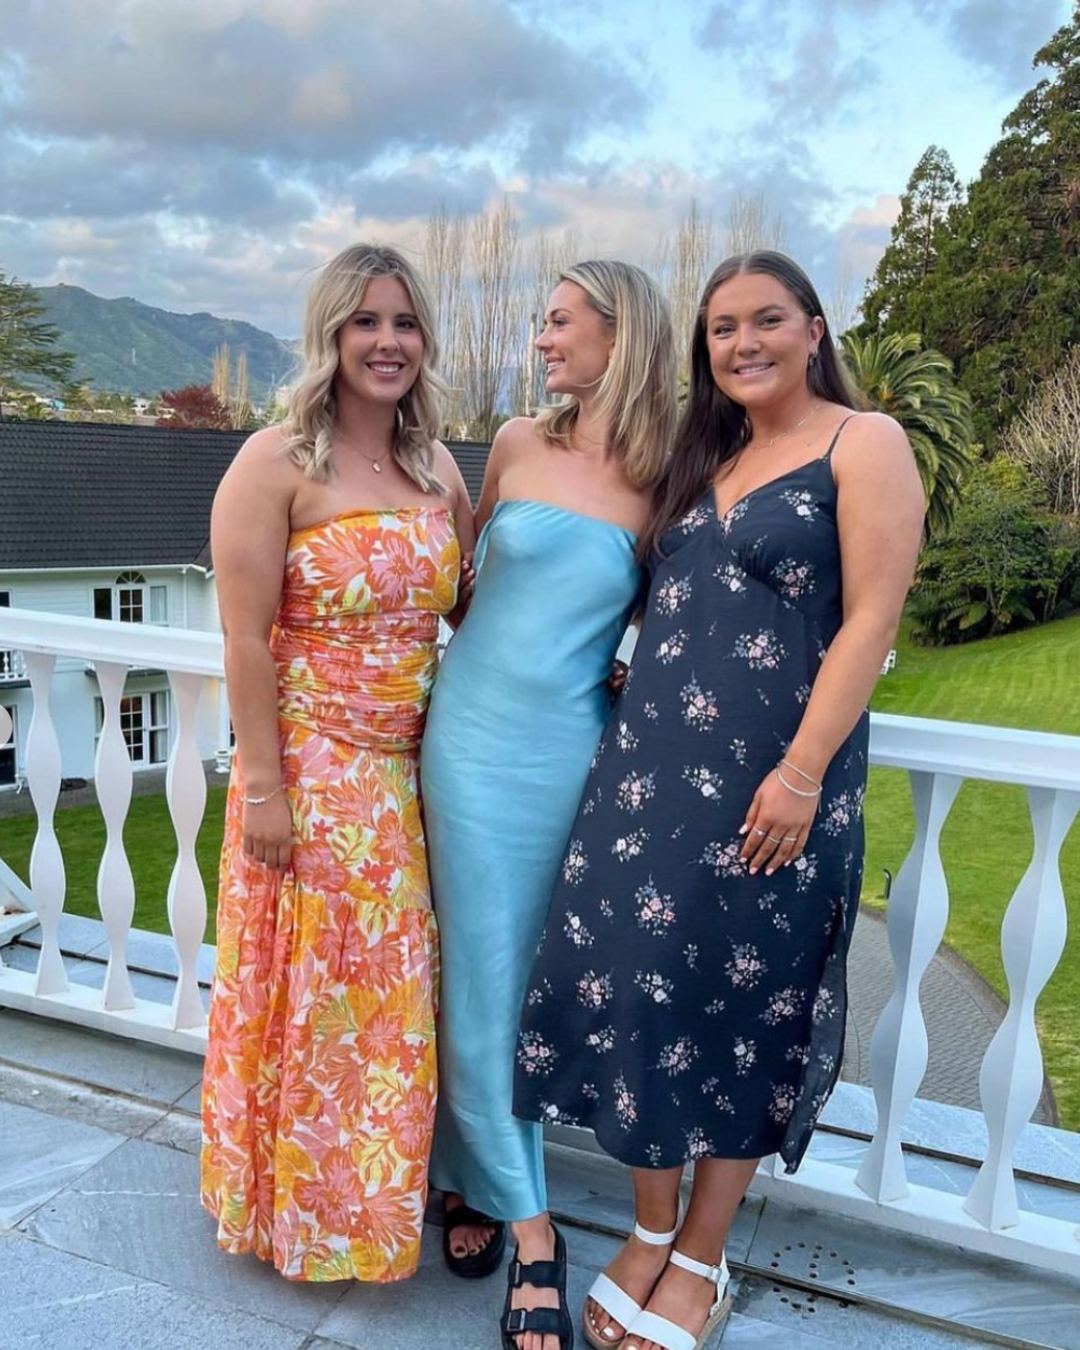 Three women pose wearing different dresses.